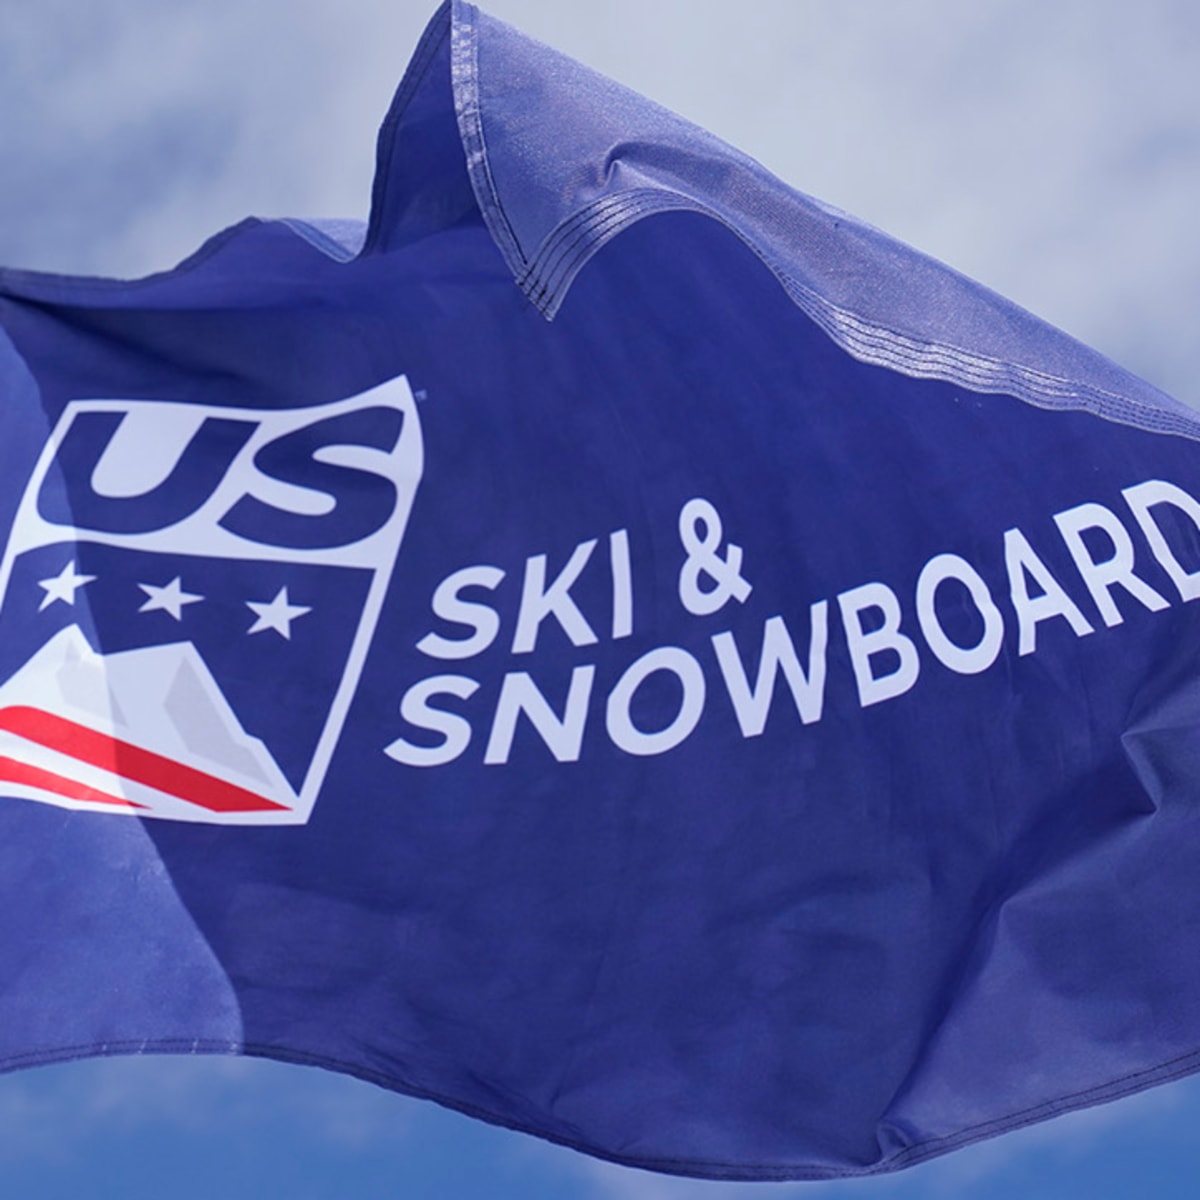 amateur ski assocoation of america